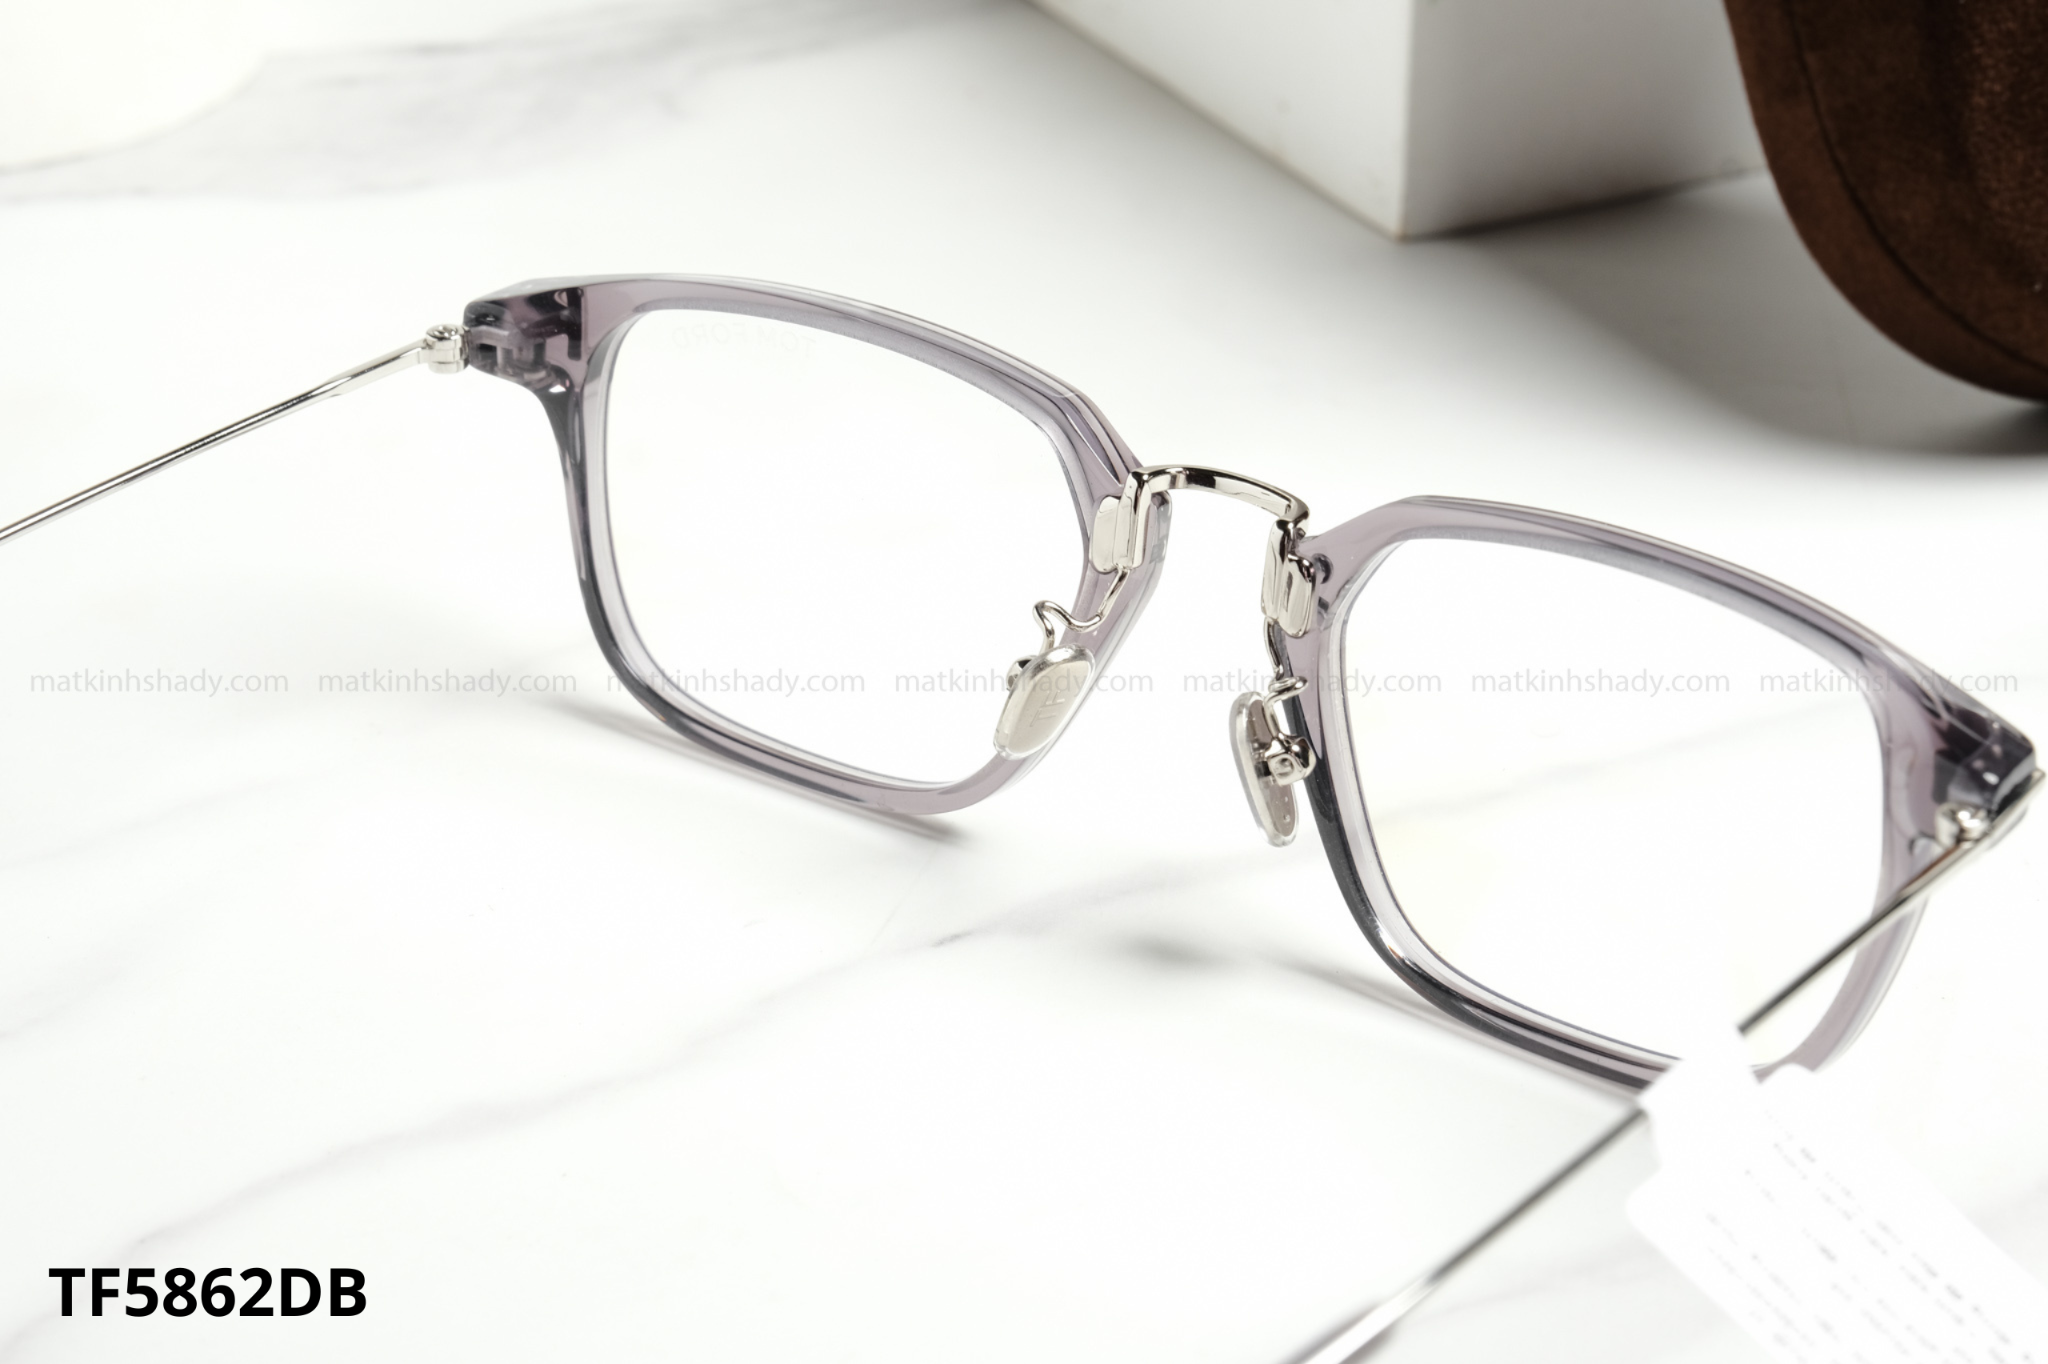  Tom Ford Eyewear - Glasses - TF5862DB 